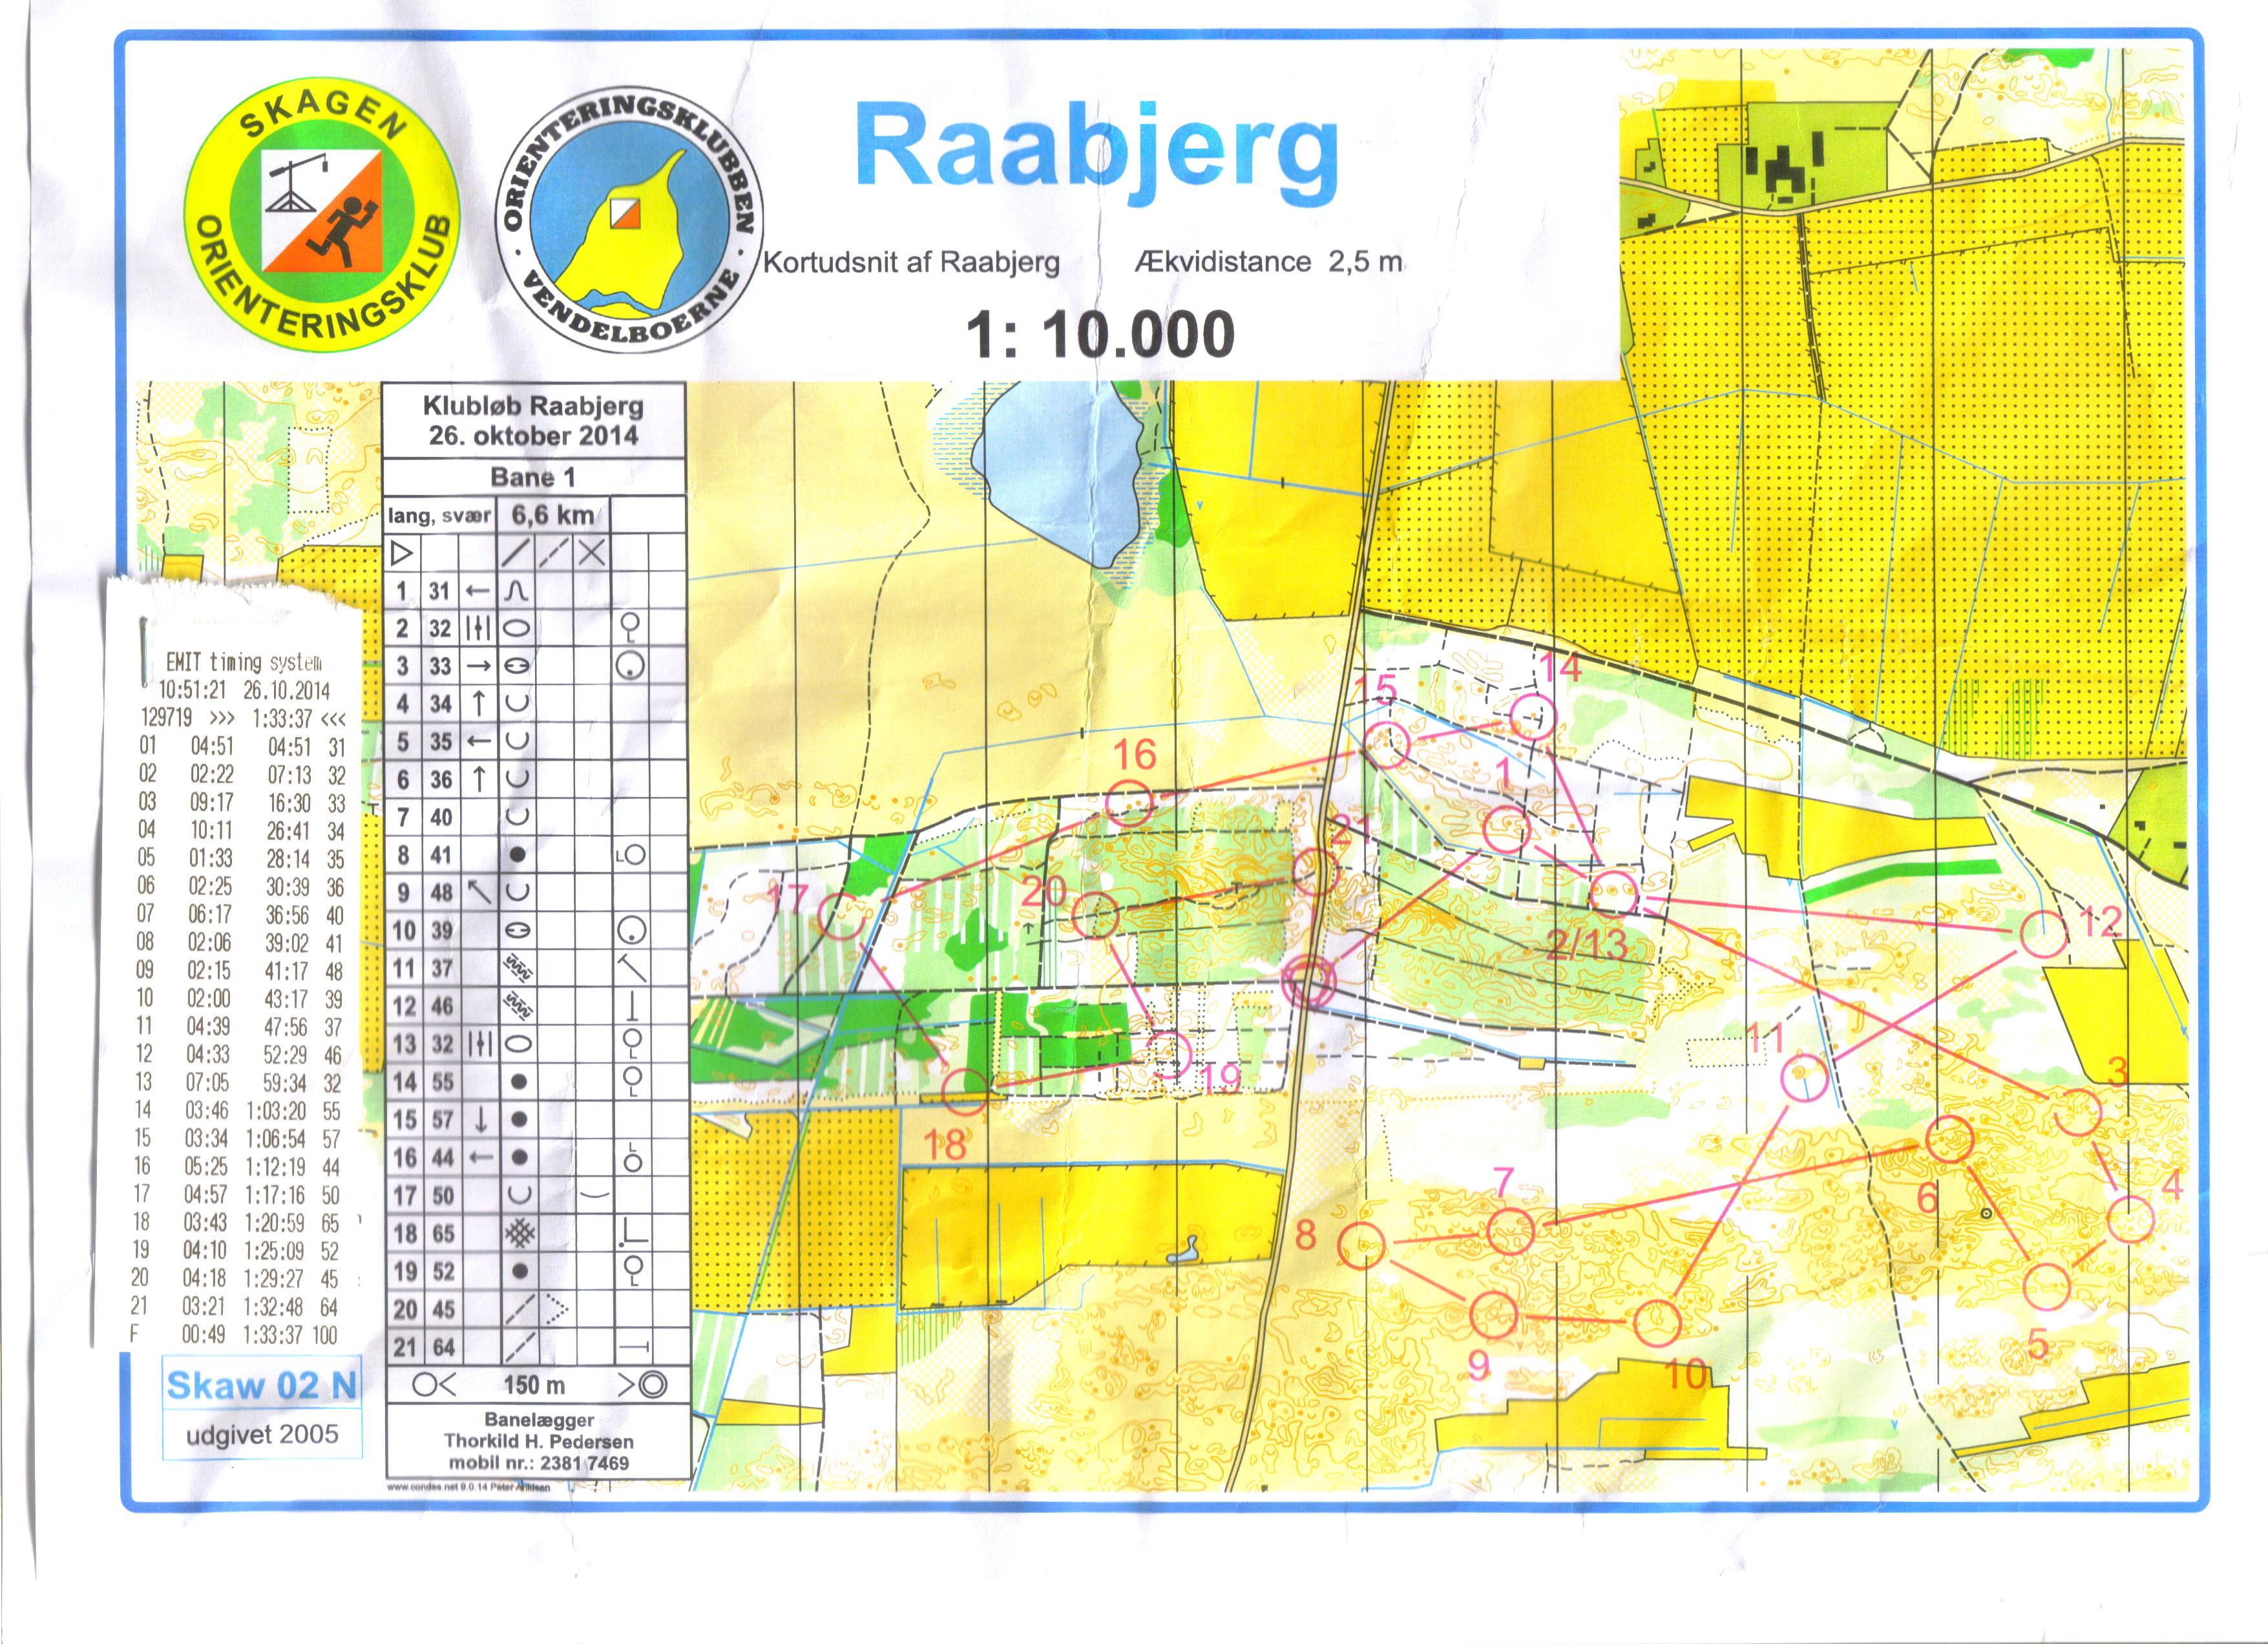 Raabjerg (27.10.2014)